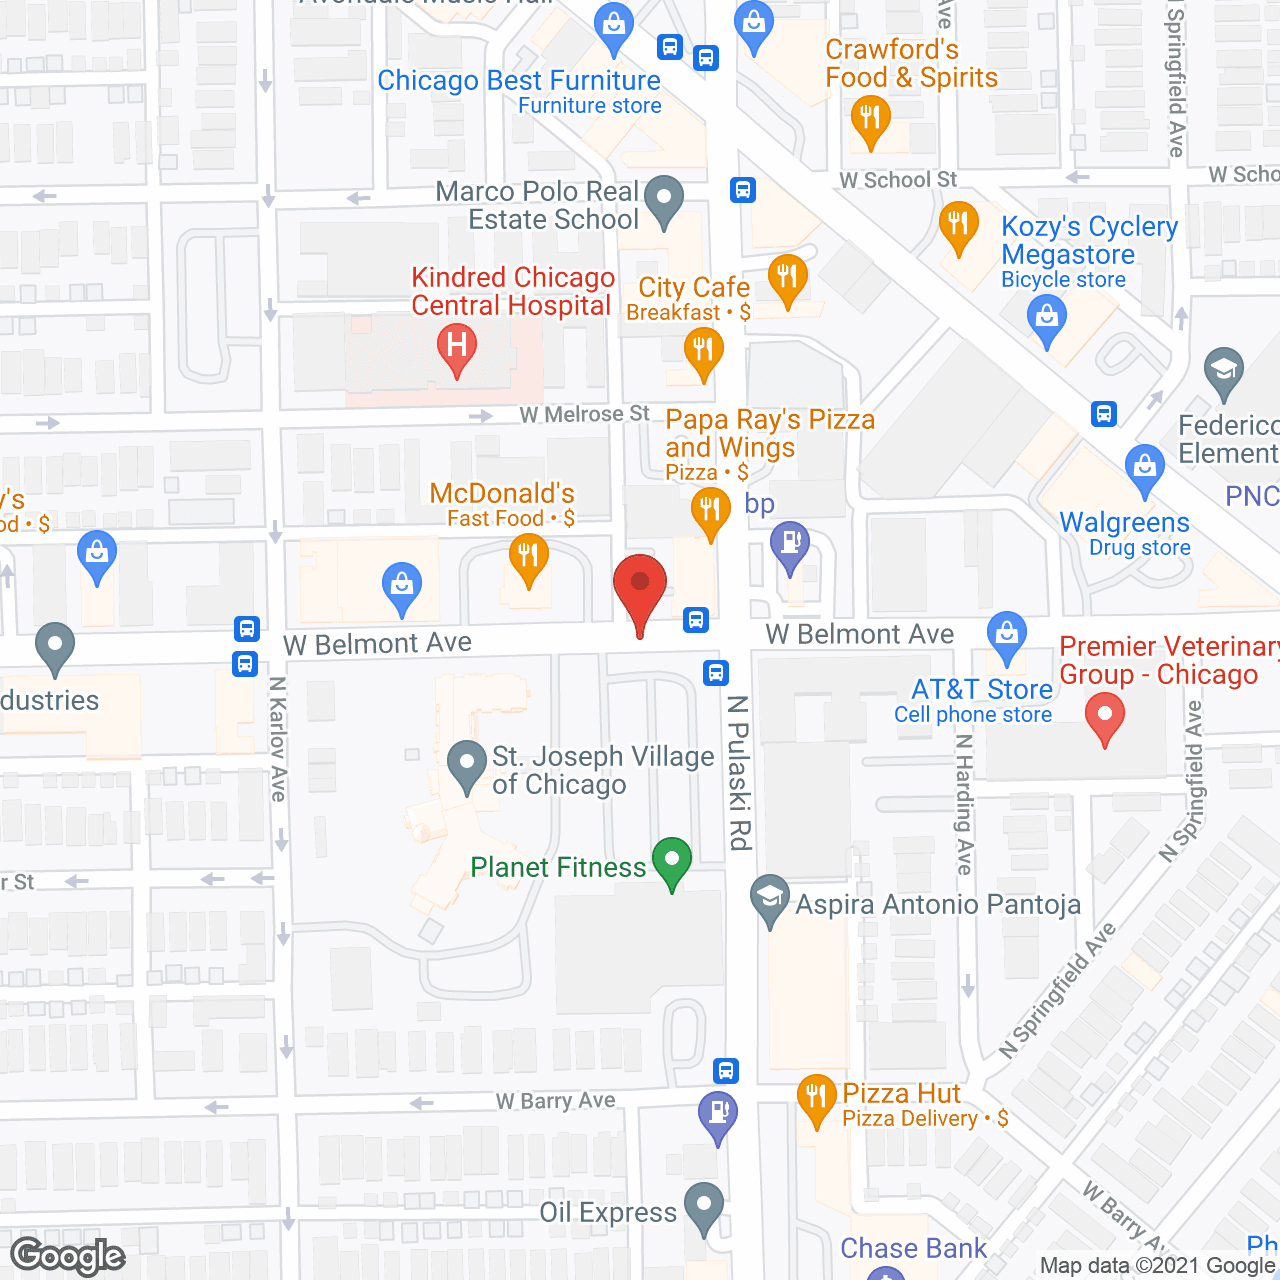 St. Joseph Village of Chicago in google map